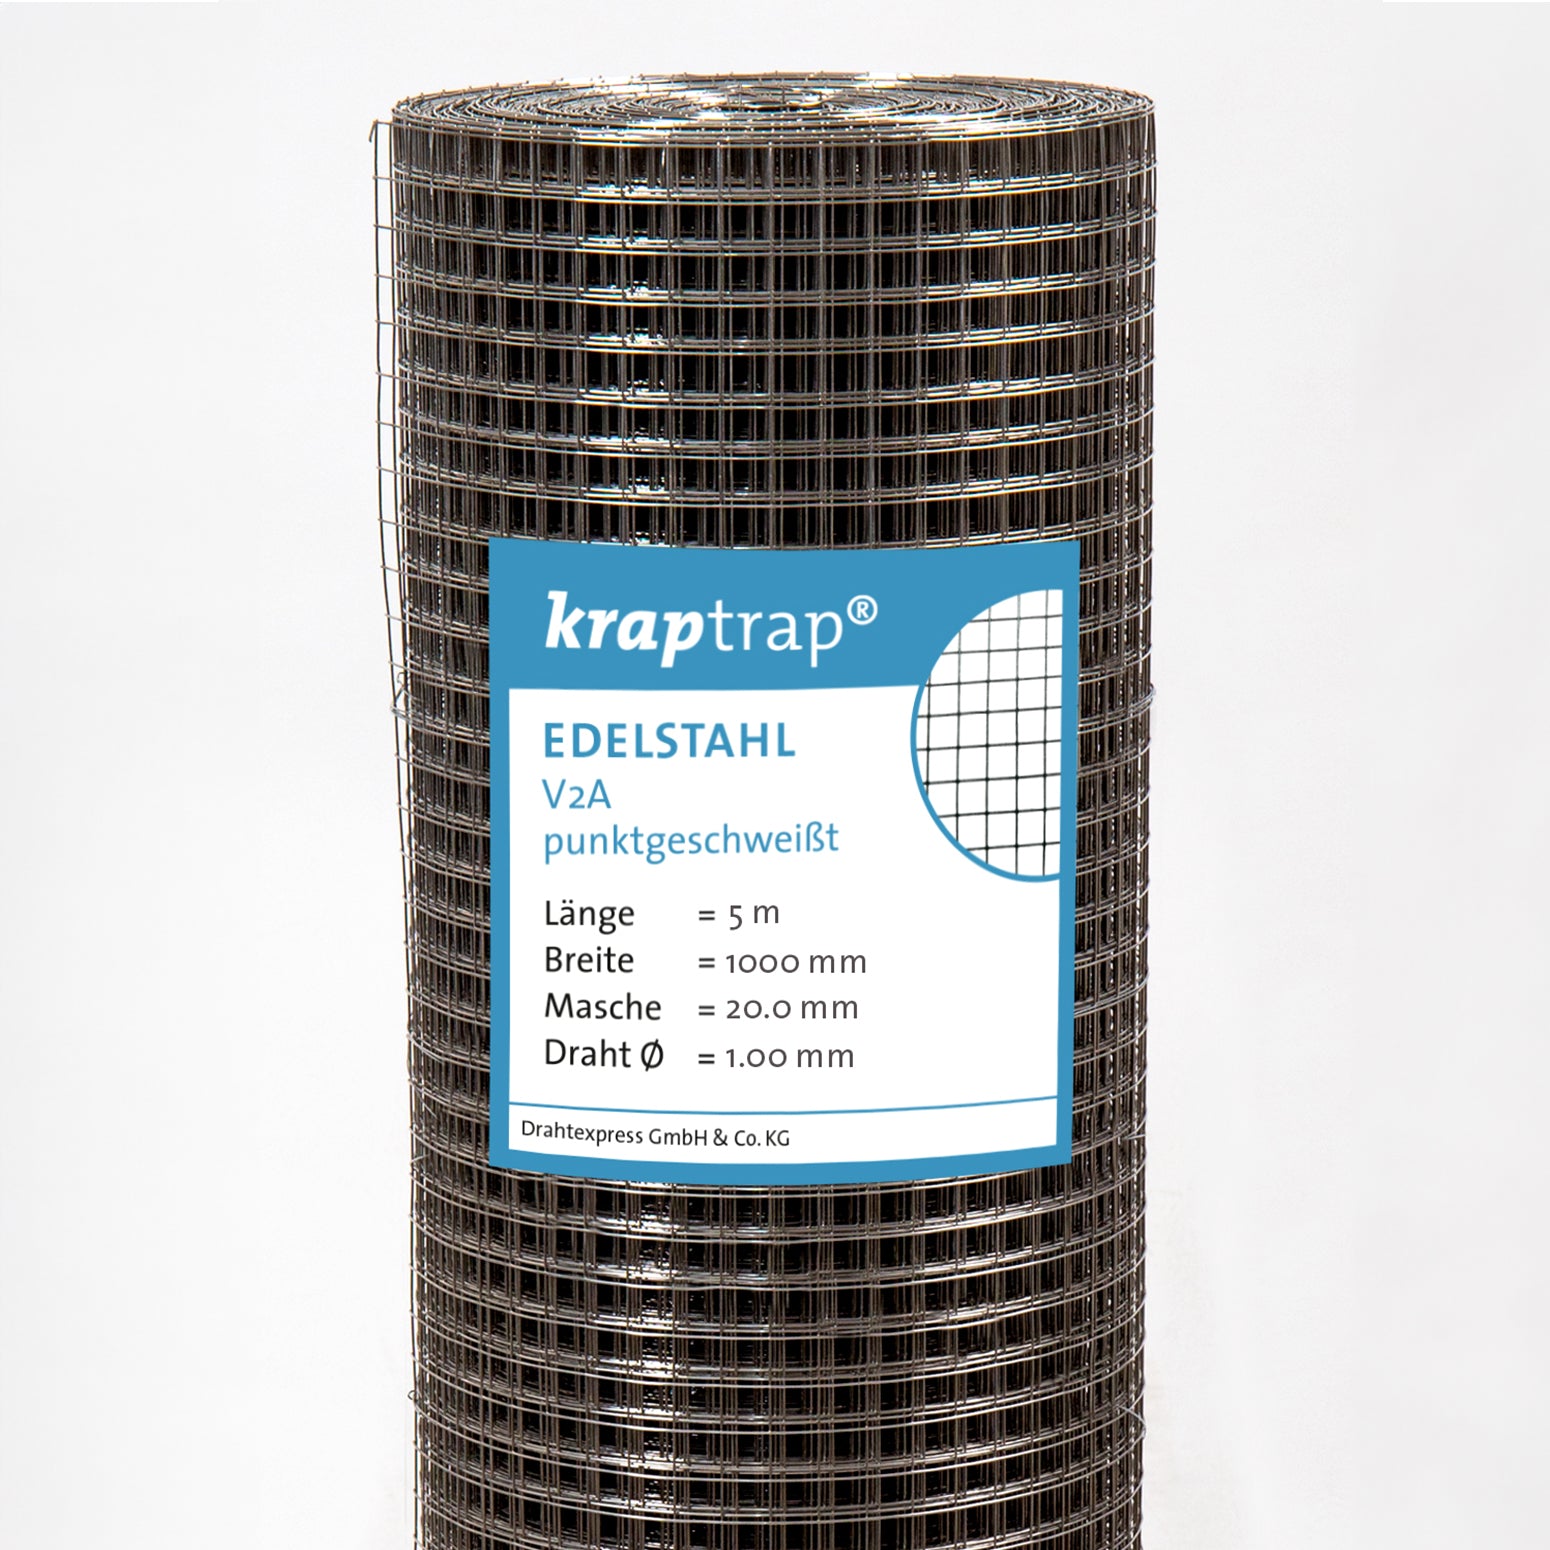 Kraptrap® Edelstahl Drahtgitter V2A 20 x 20 mm mit 1,0 mm Stärke